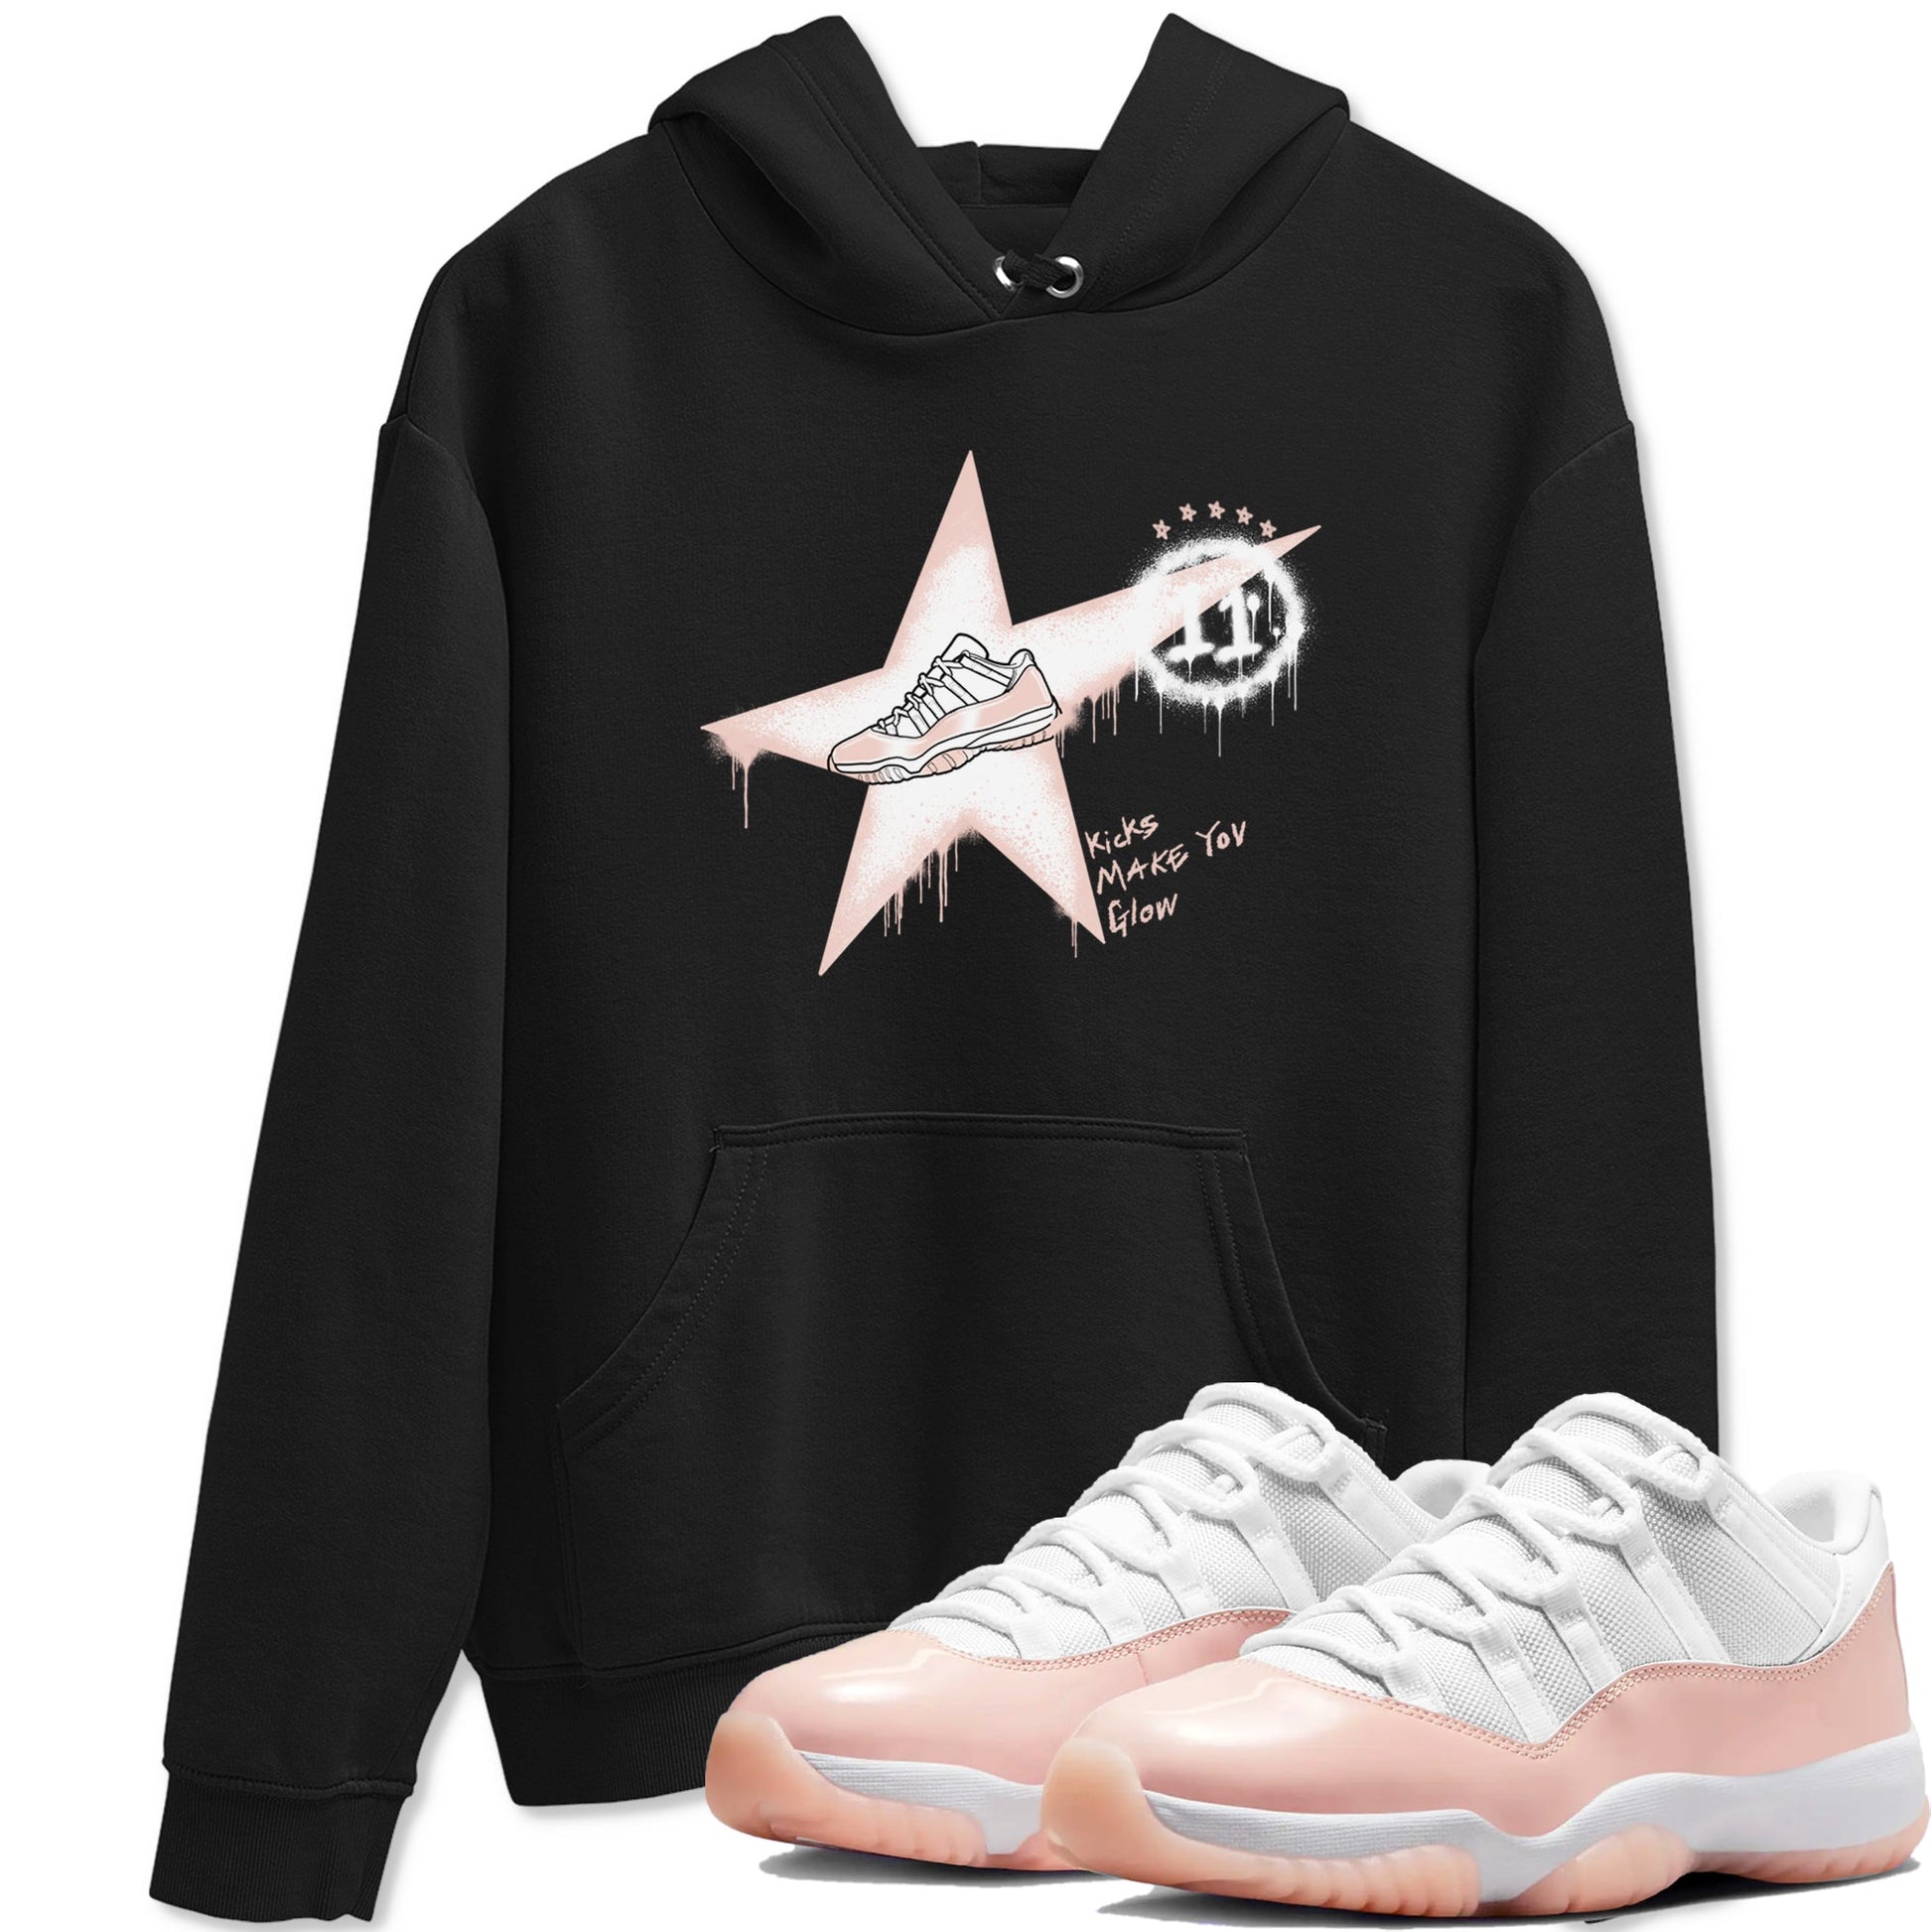 11s Legend Pink shirt to match jordans Kicks Make You Glow sneaker tees Air Jordan 11 Legend Pink SNRT Sneaker Release Tees unisex cotton Black 1 crew neck shirt